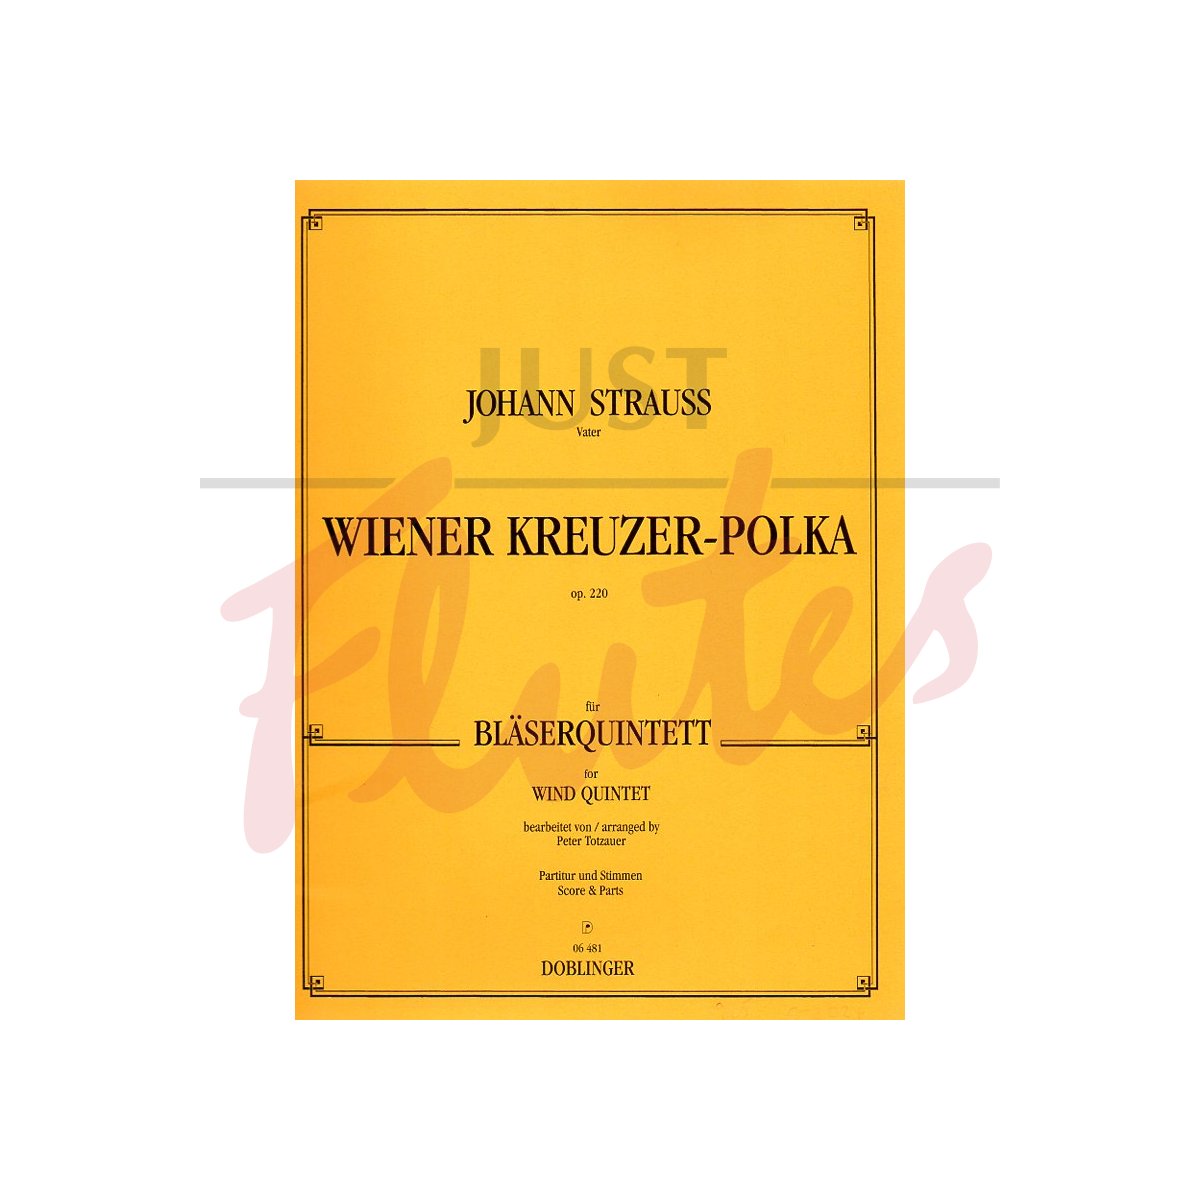 Wiener Kreuzer Polka arranged for Wind Quintet